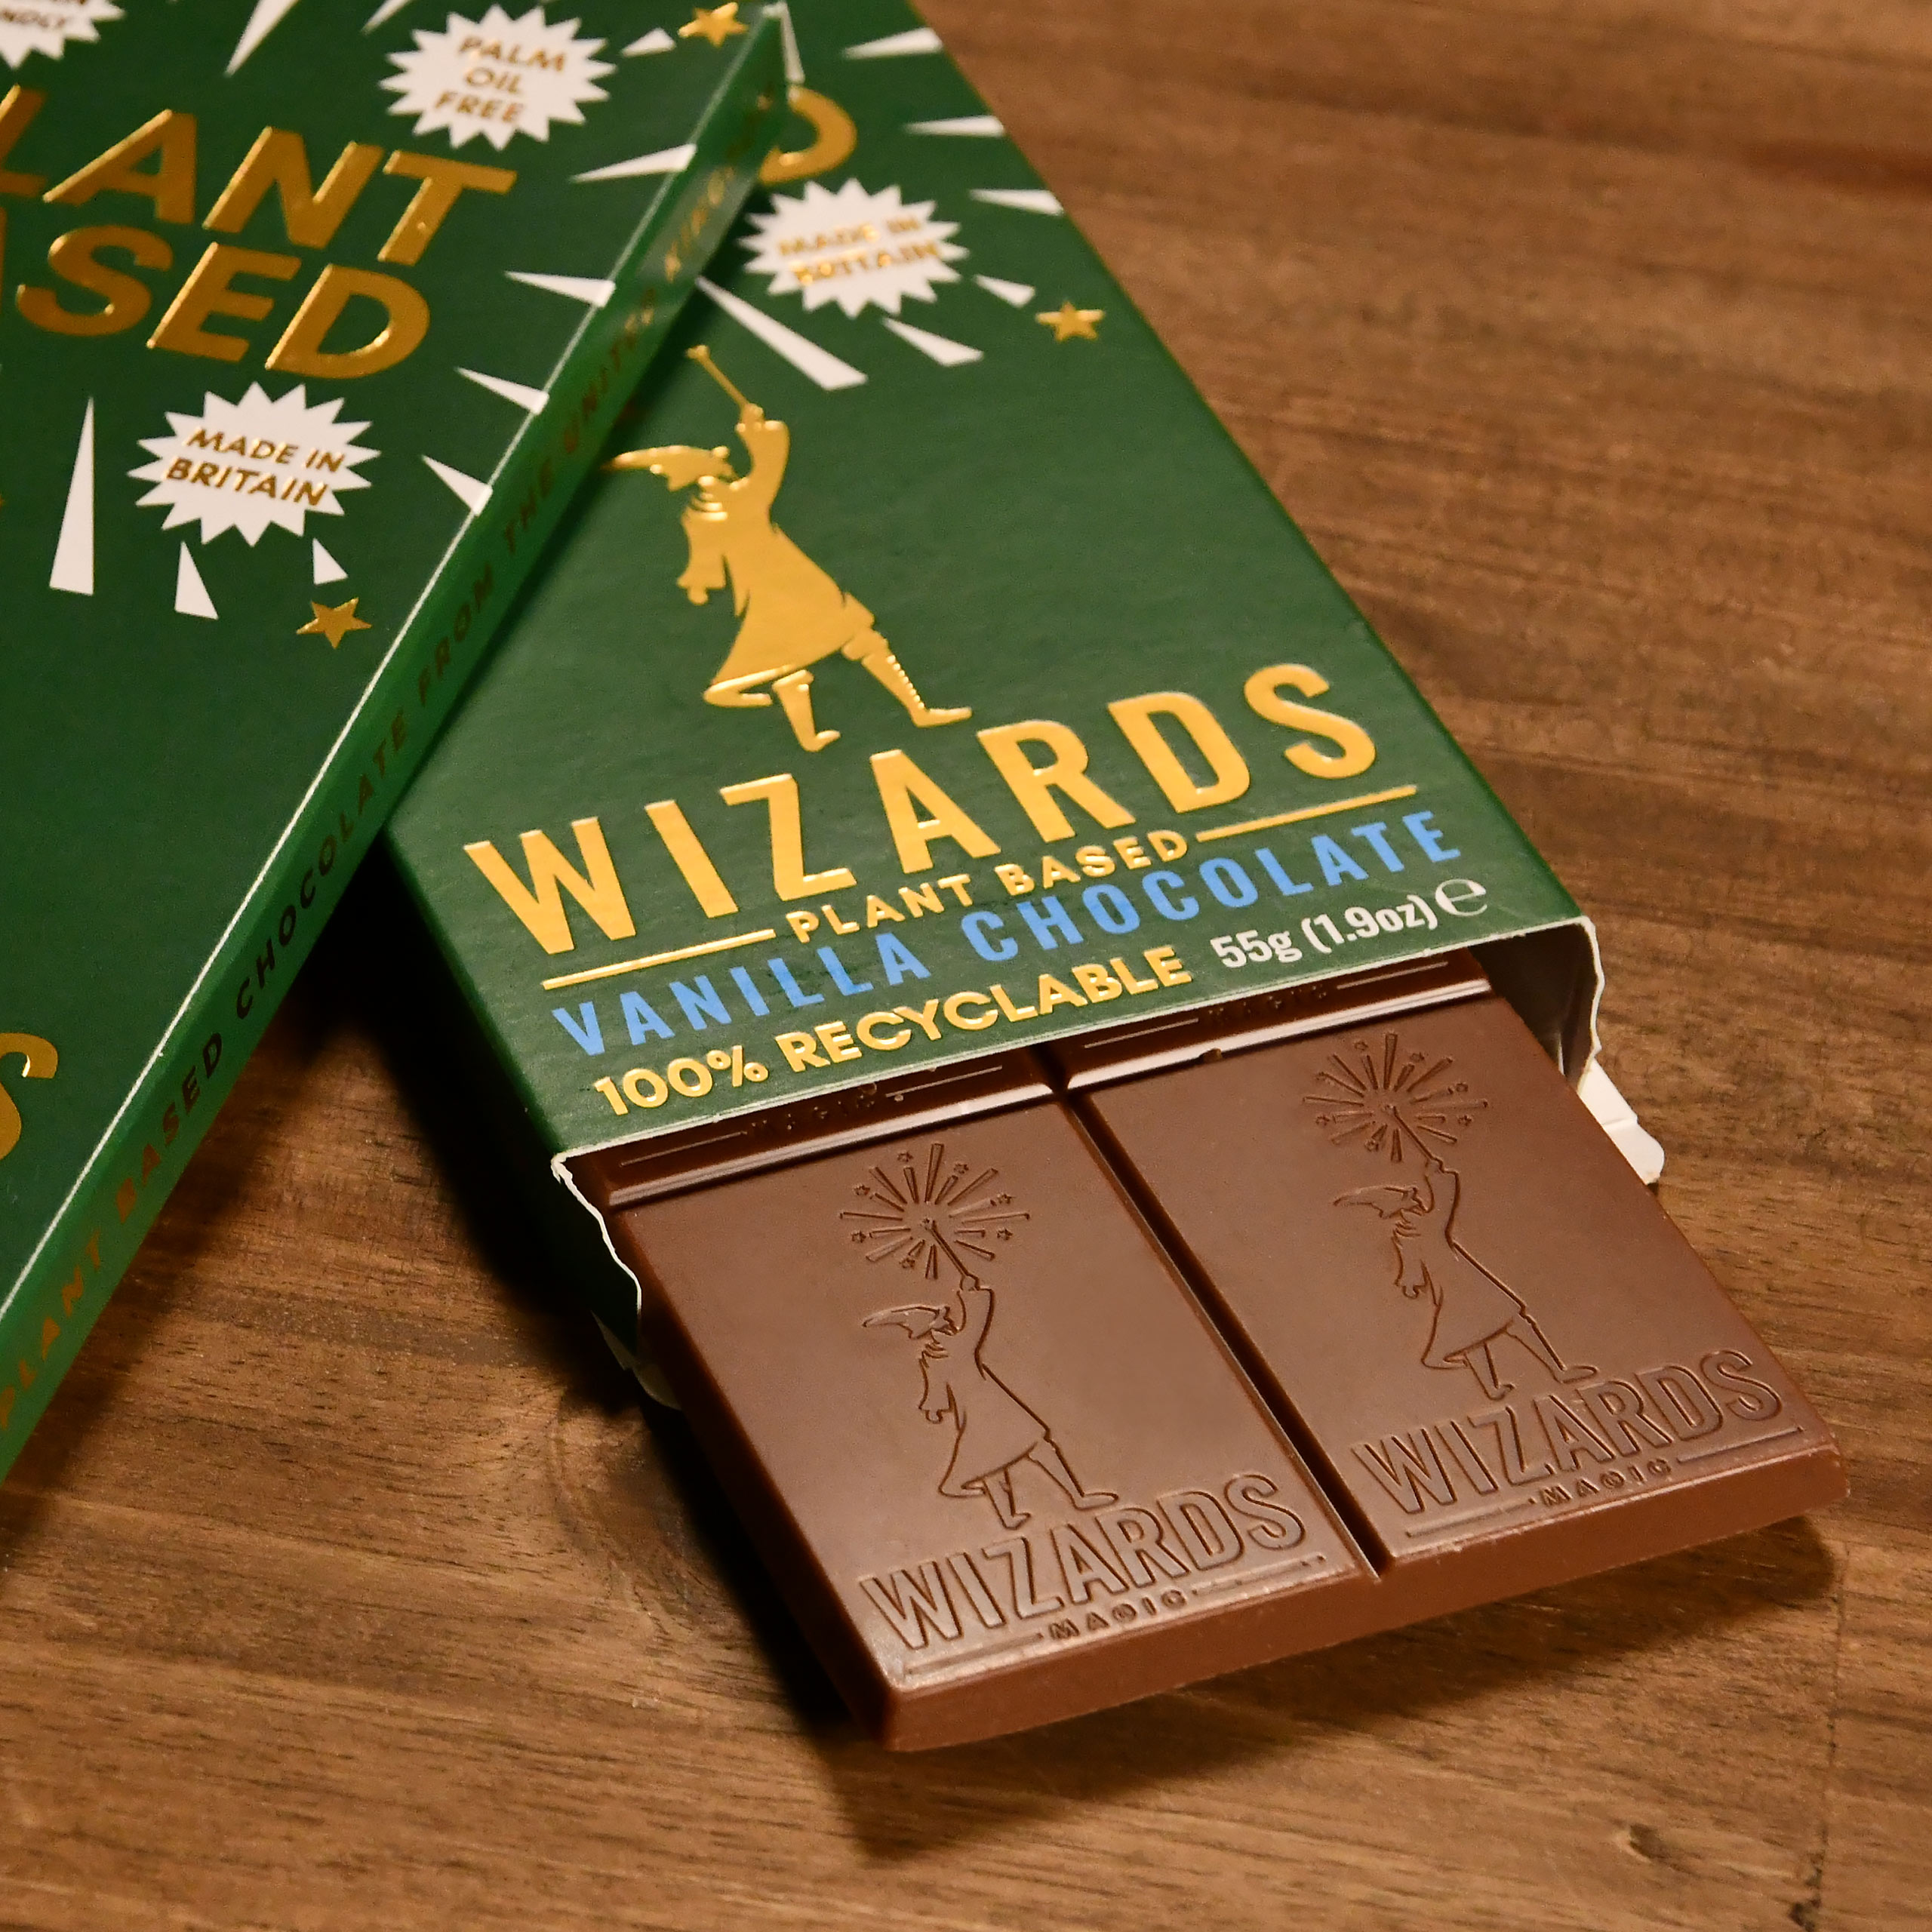 Wizards Magic - Plant Based Selection Schokolade 4 Tafeln